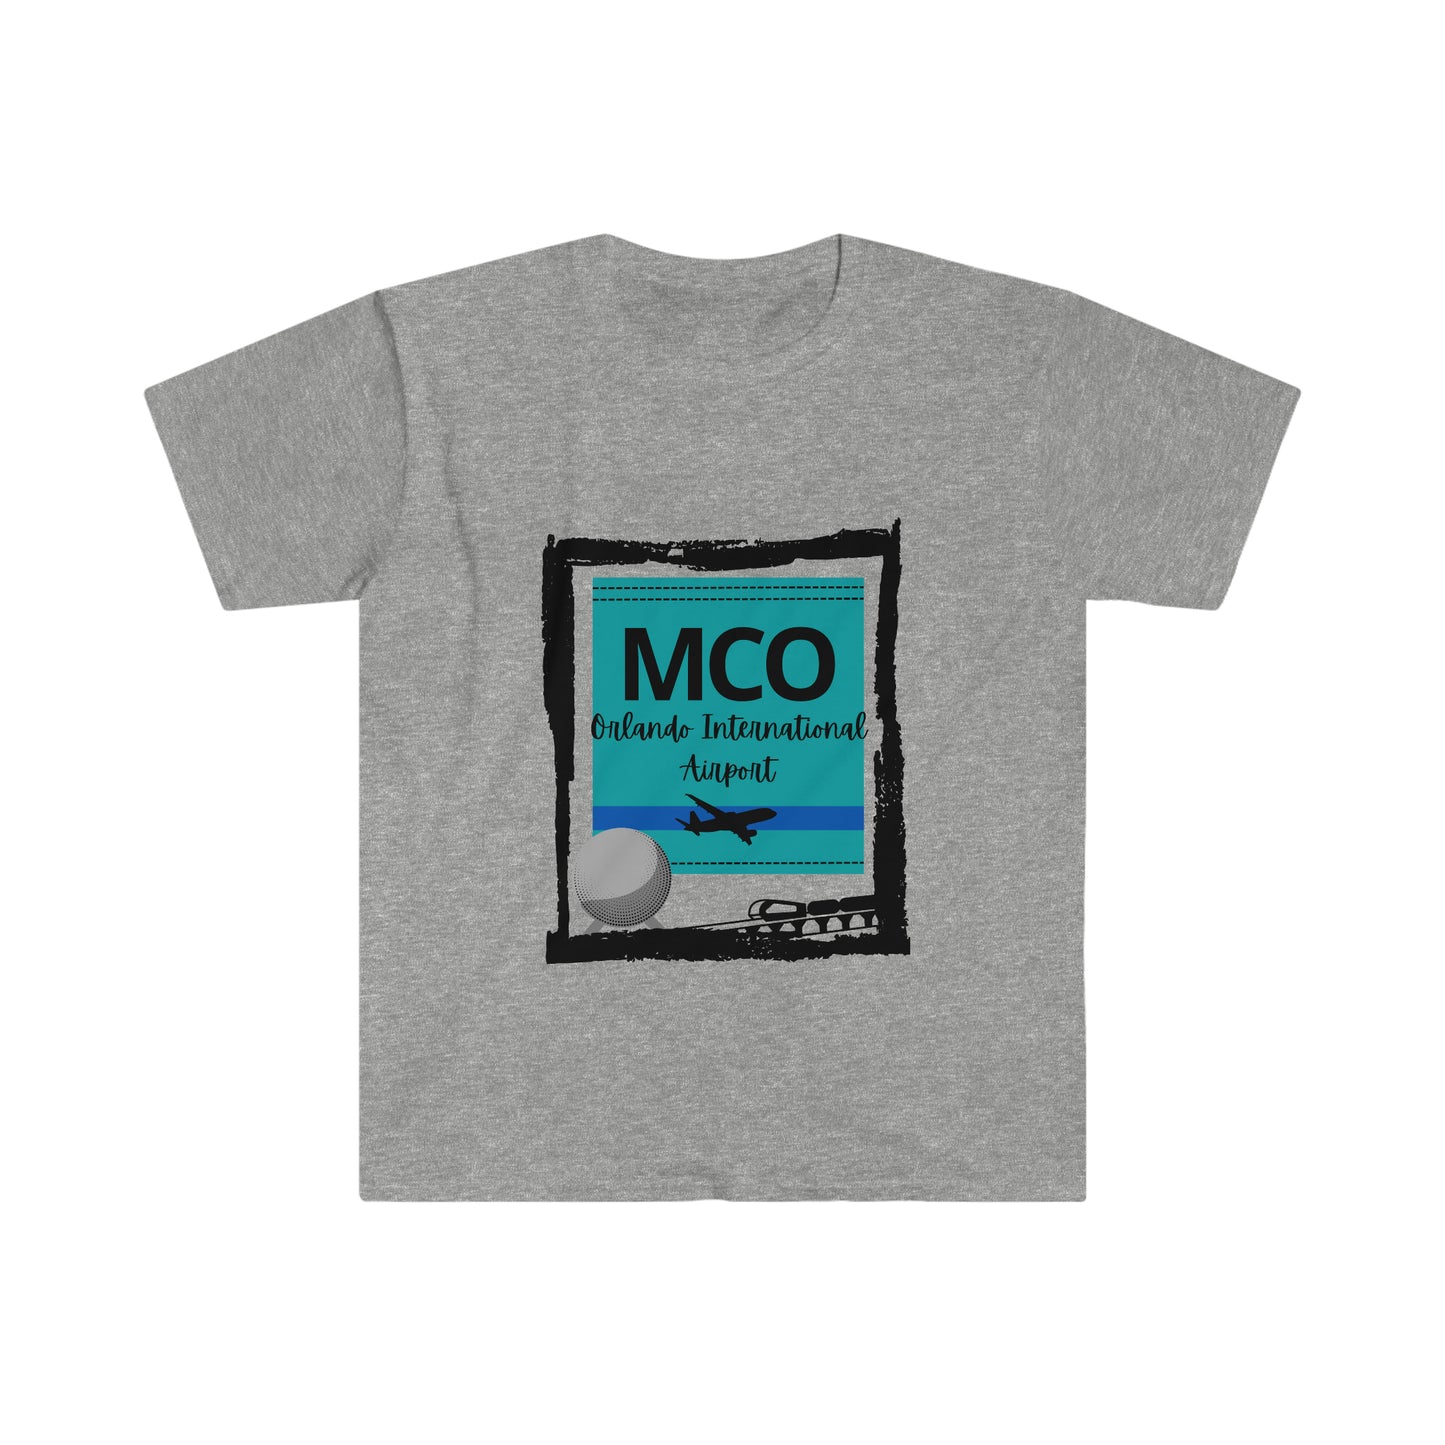 MCO Airport T-shirt for Orlando International Airport